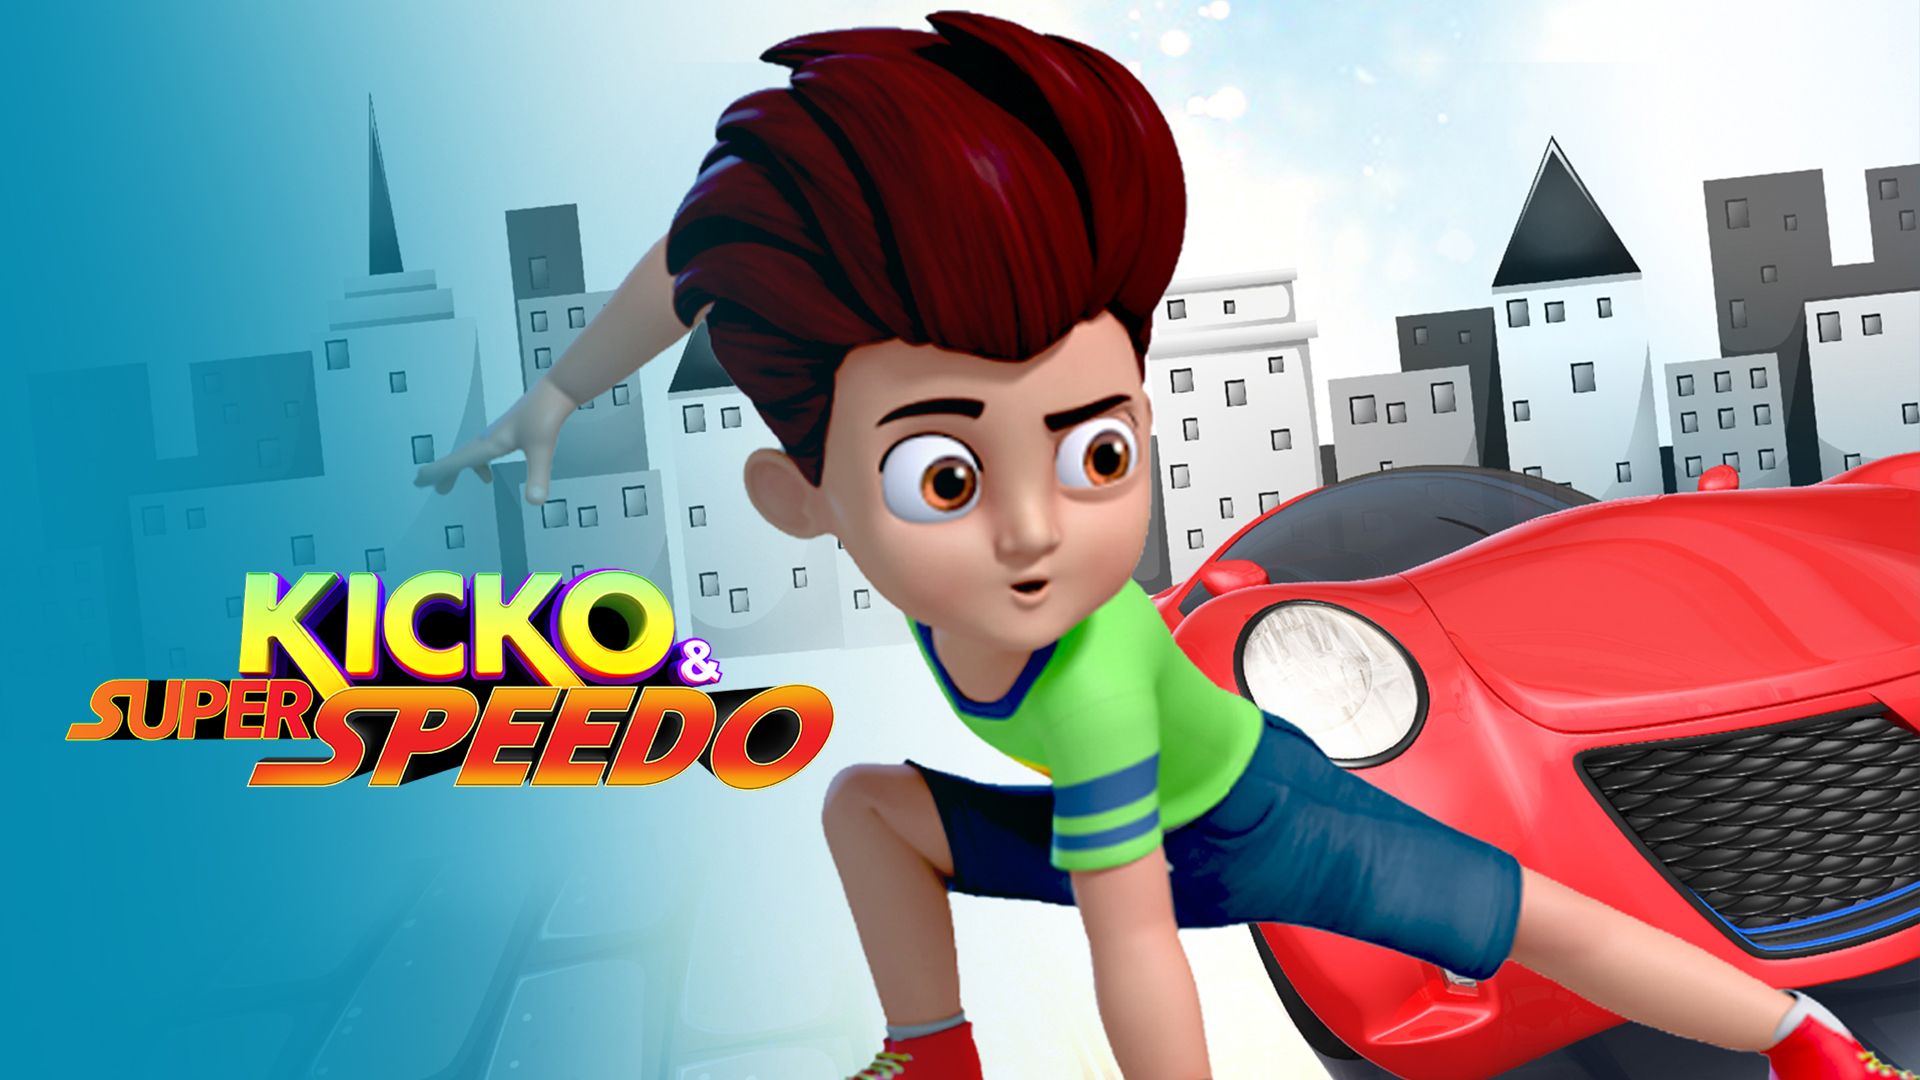 Kicko And Super Speedo